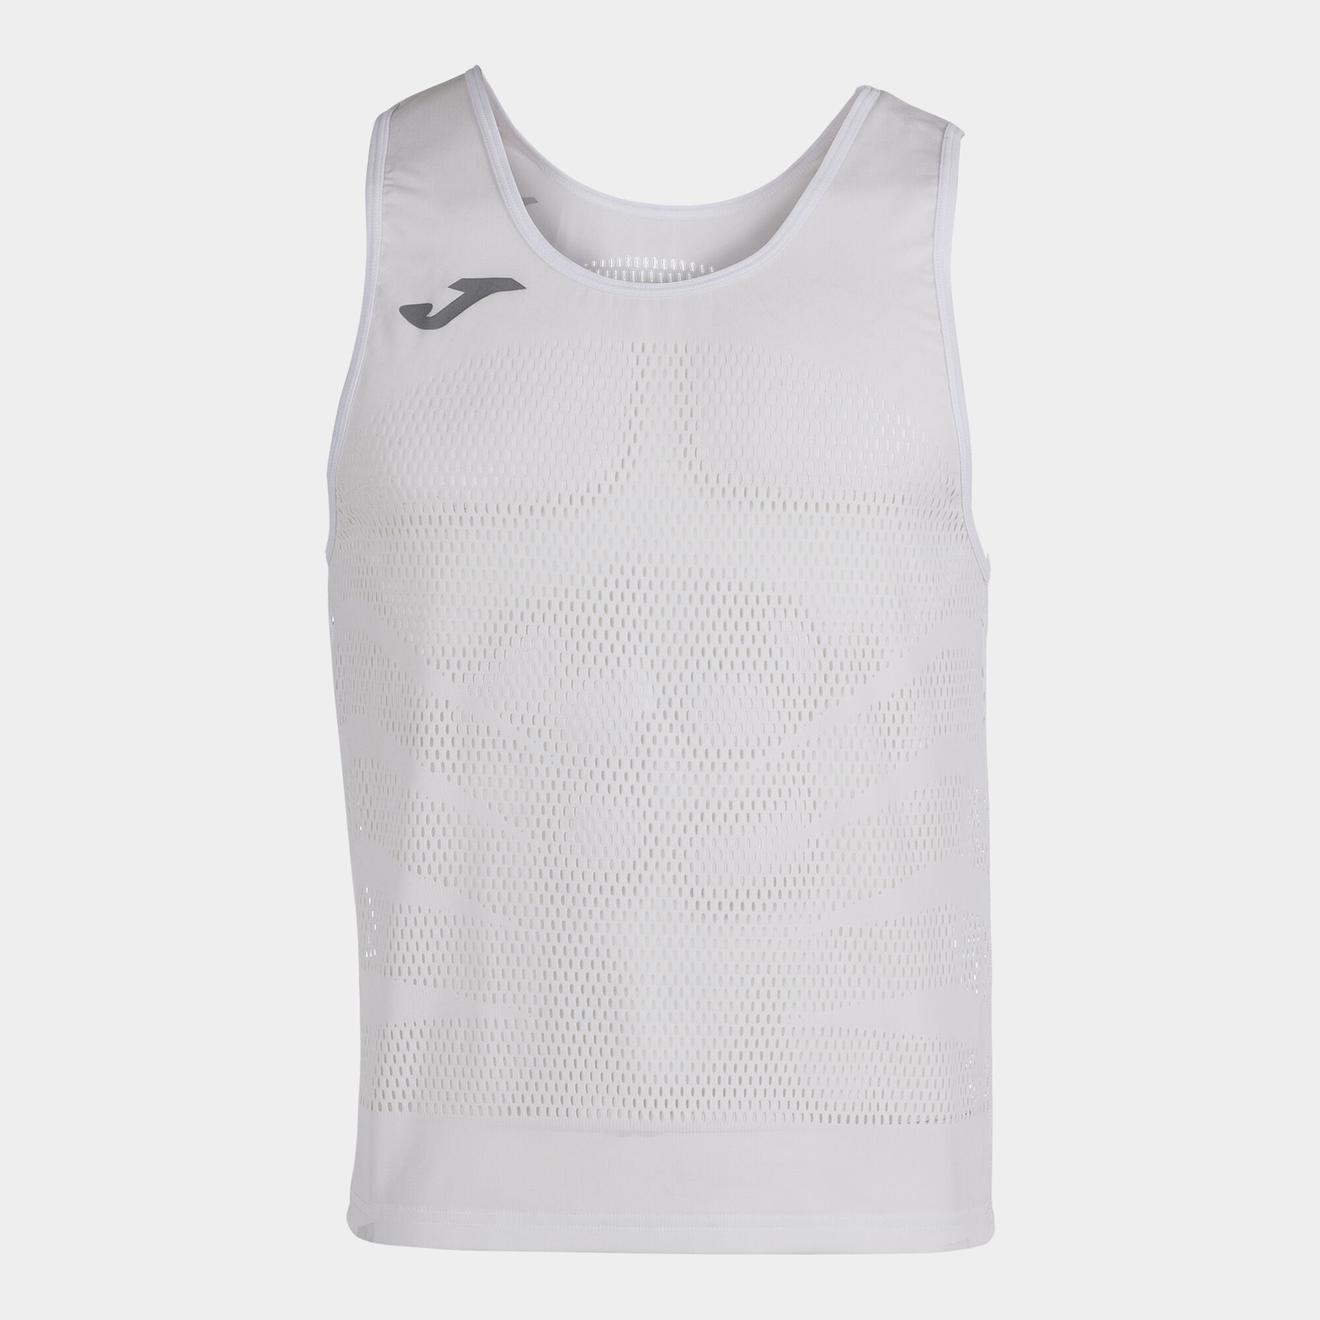 Oferta de Camiseta tirantes hombre Marathon blanco por 11,13€ en Joma